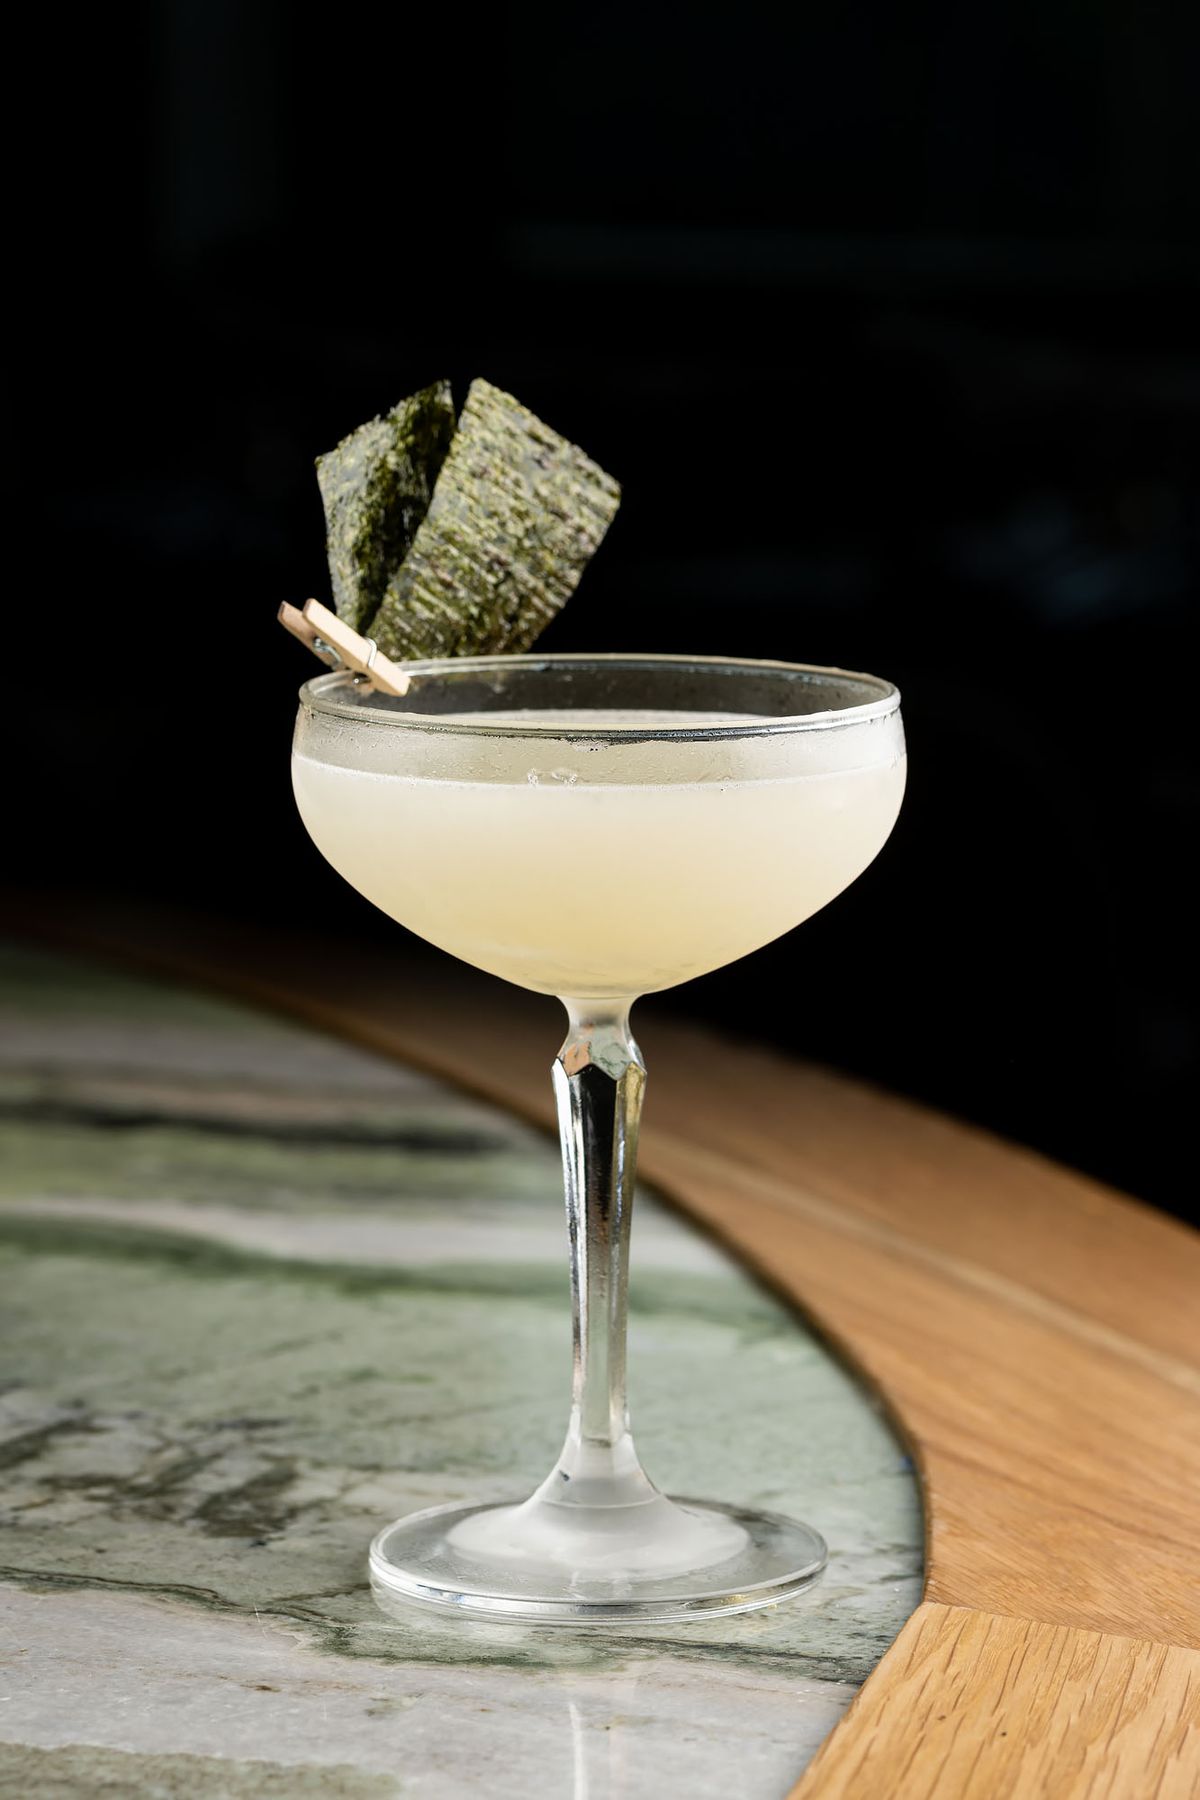 A semi-clear martini in a coupe glass.